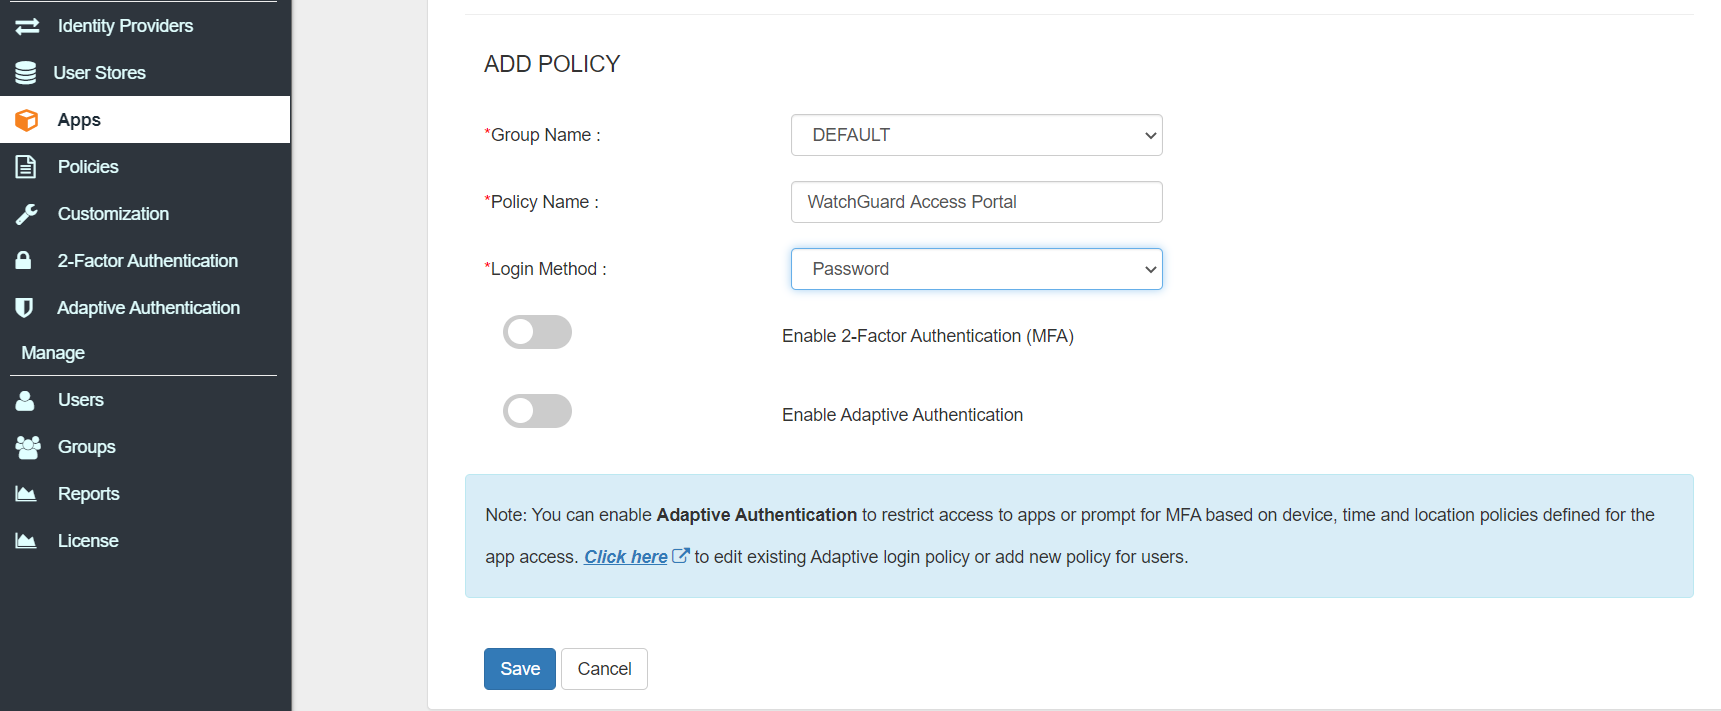 WatchGuard Access Portal 2FA / MFA policy